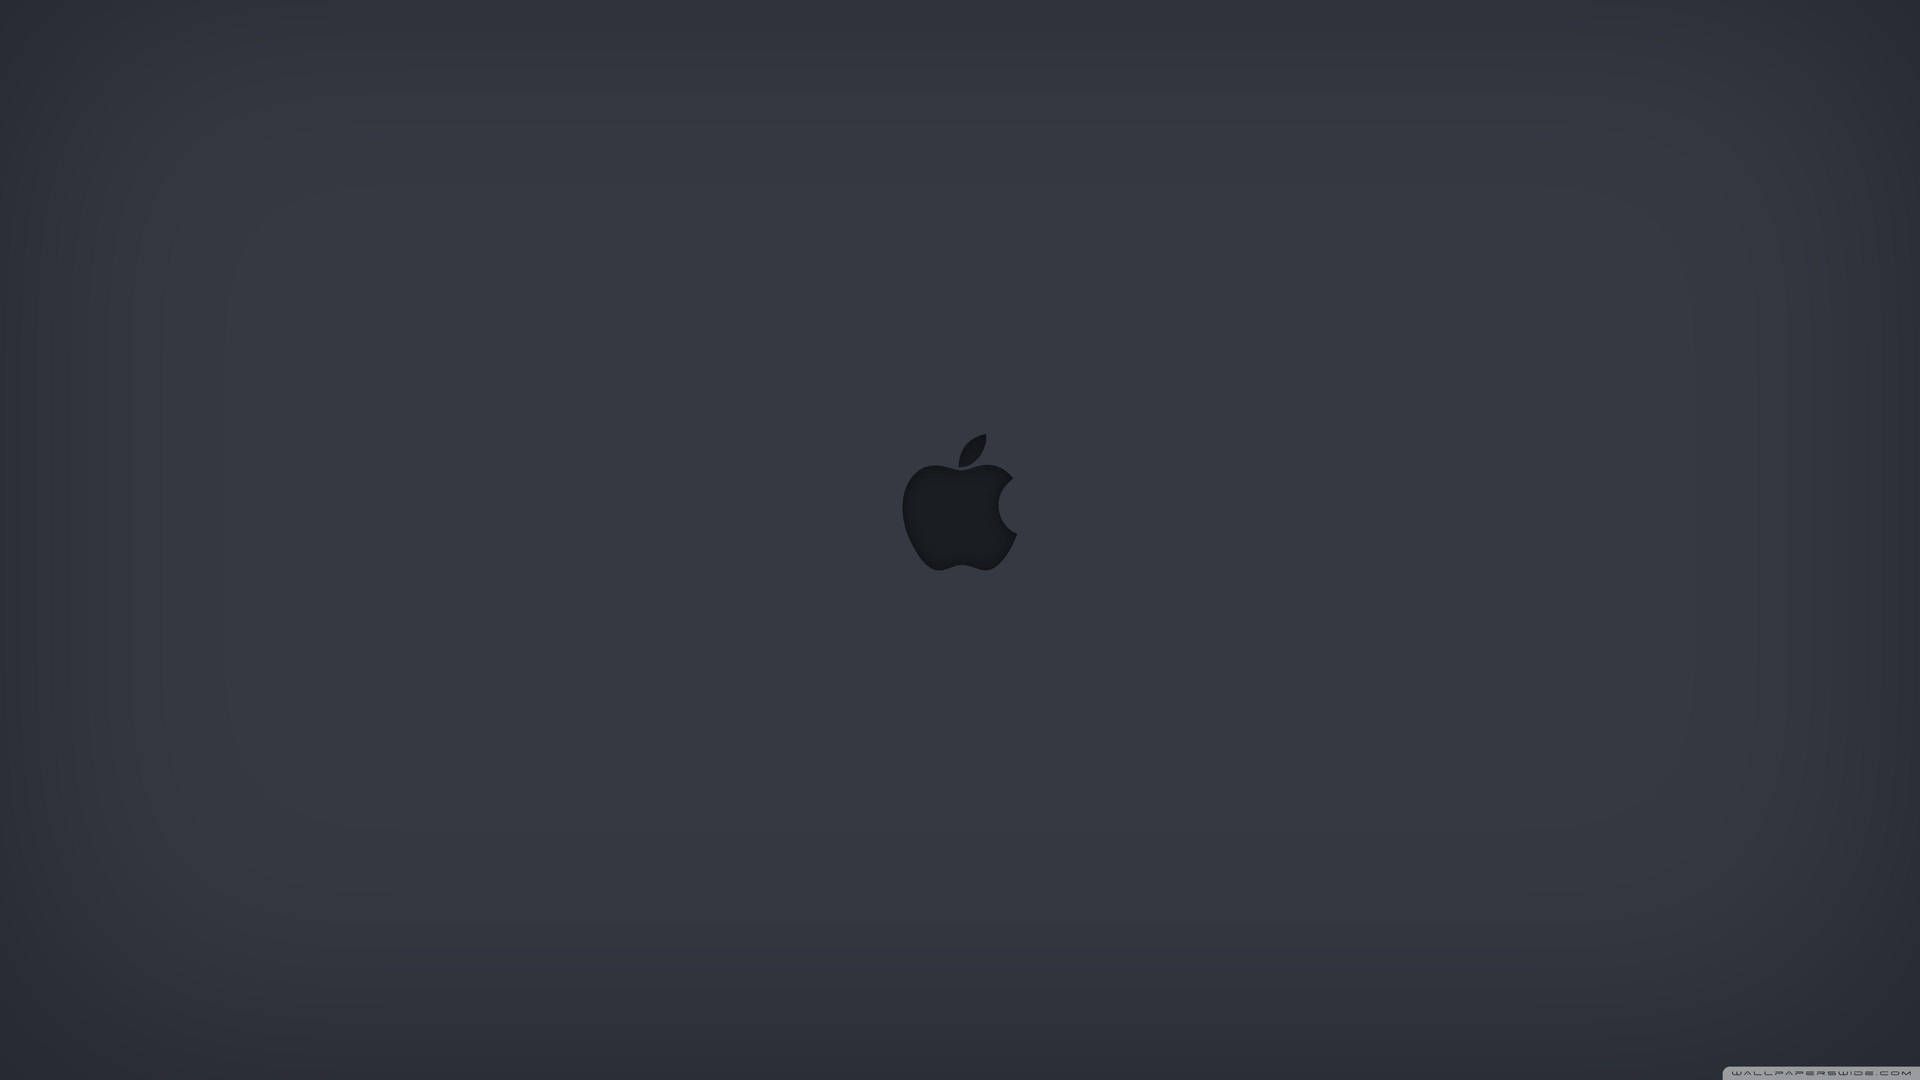 Minimalistic Apple Wallpapers - 4k, HD Minimalistic Apple Backgrounds ...